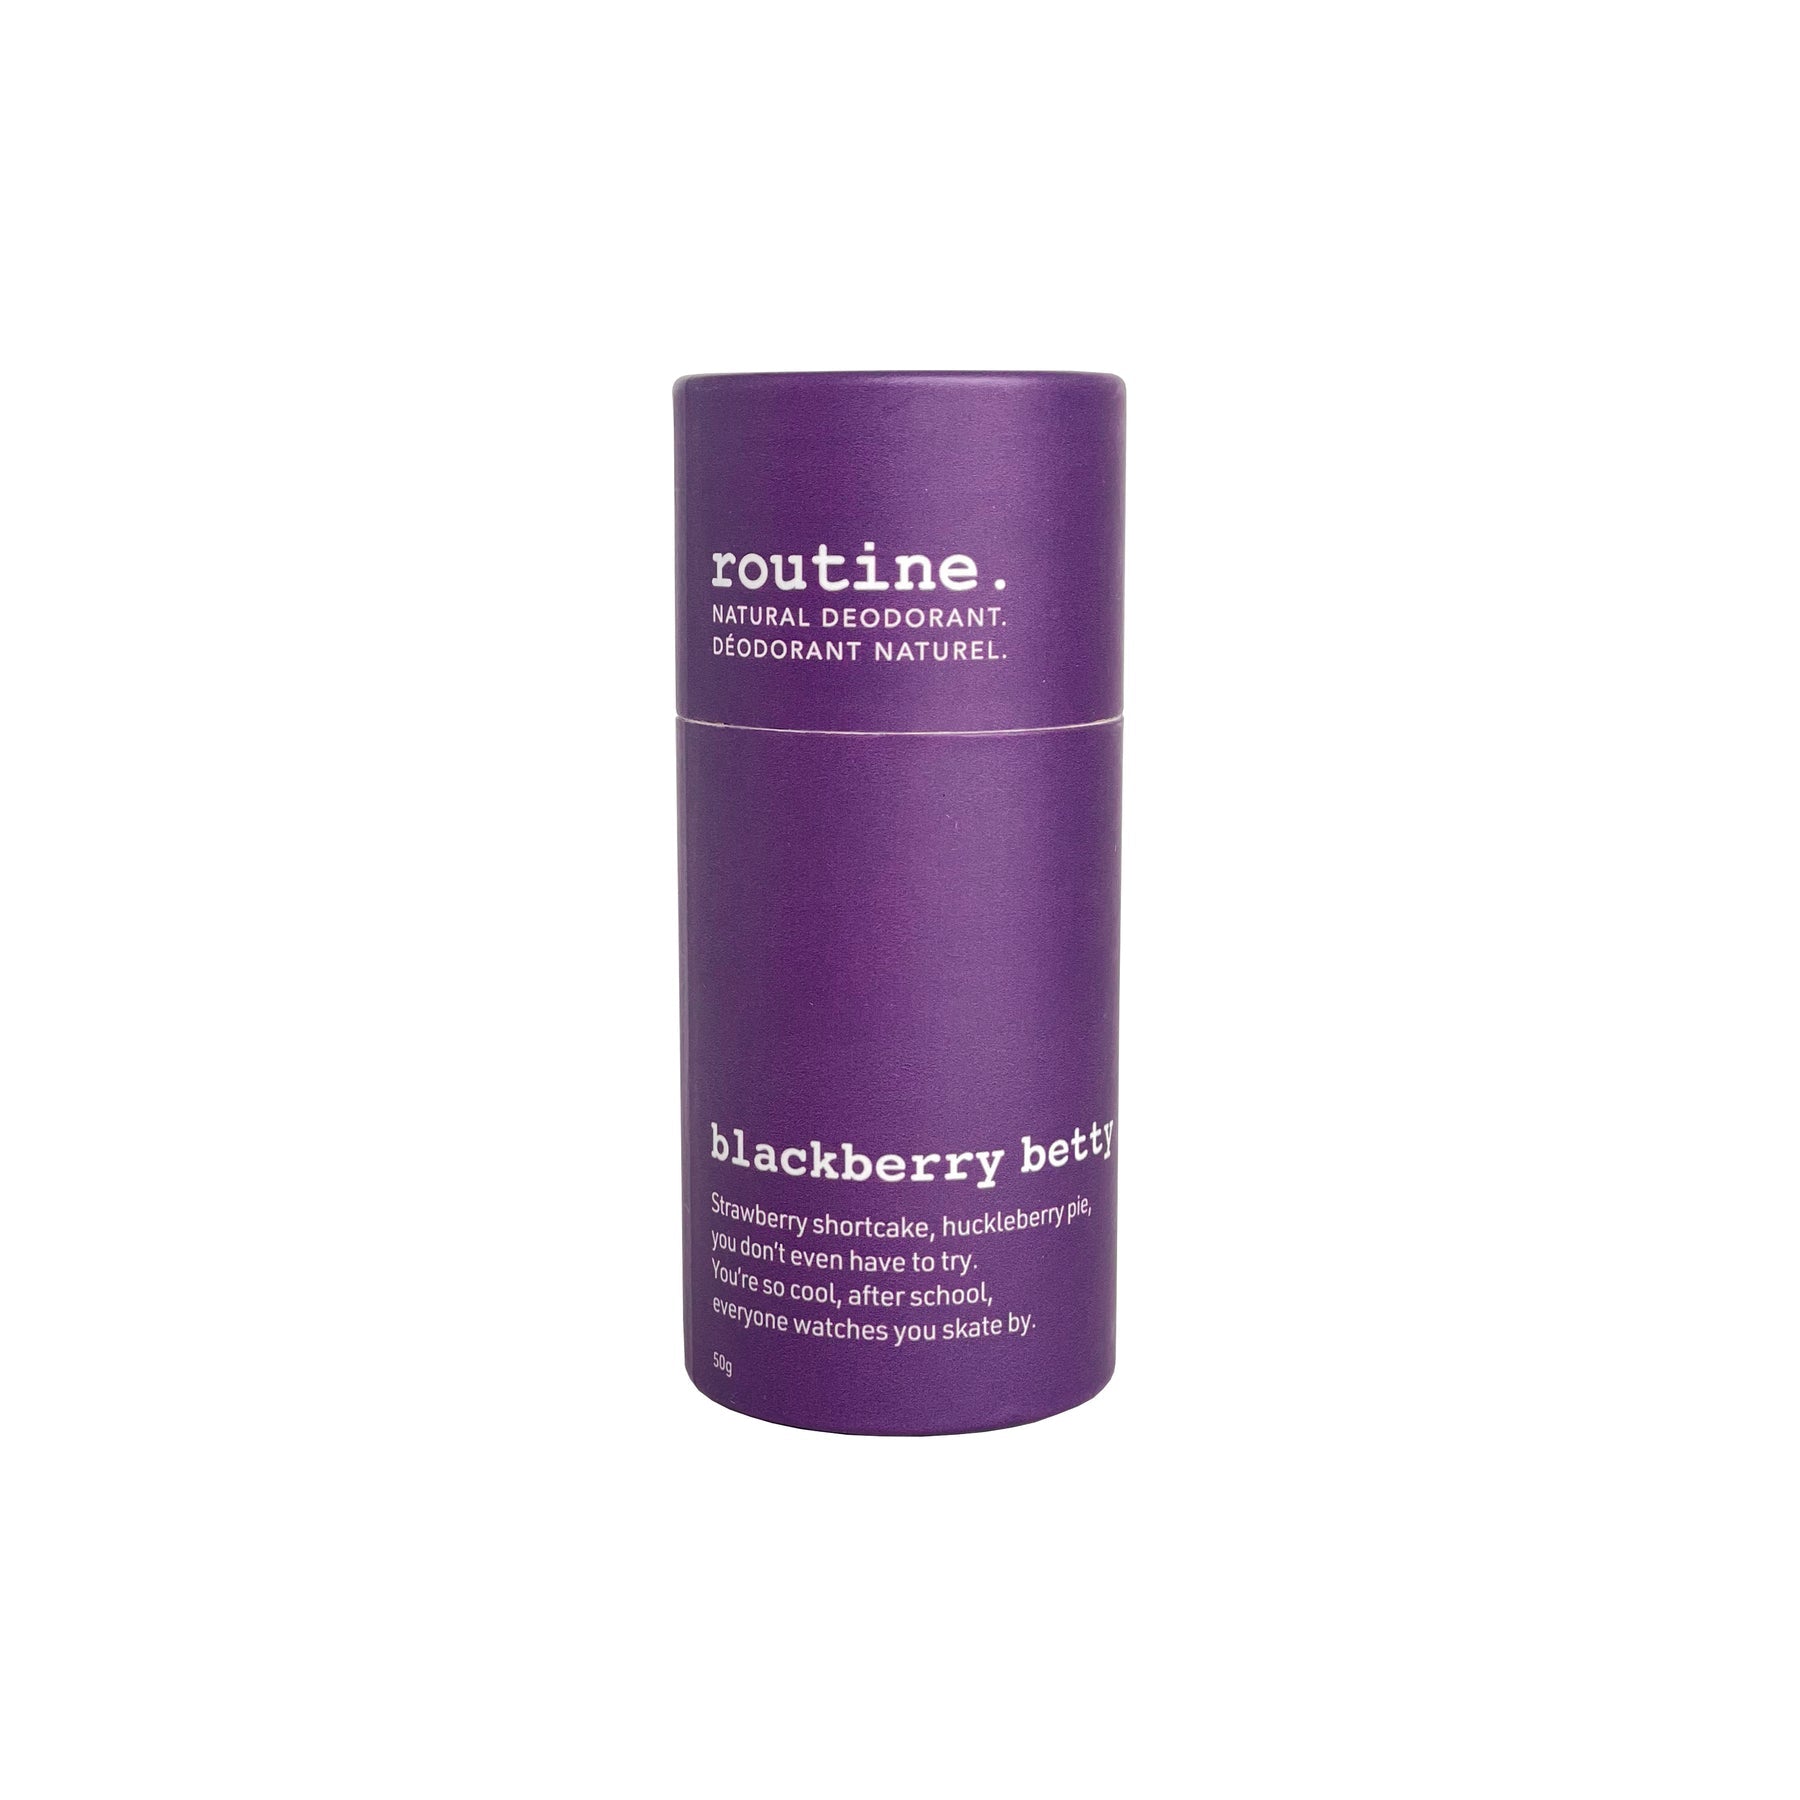 Blackberry Betty - Routine Natural Deodorant Stick